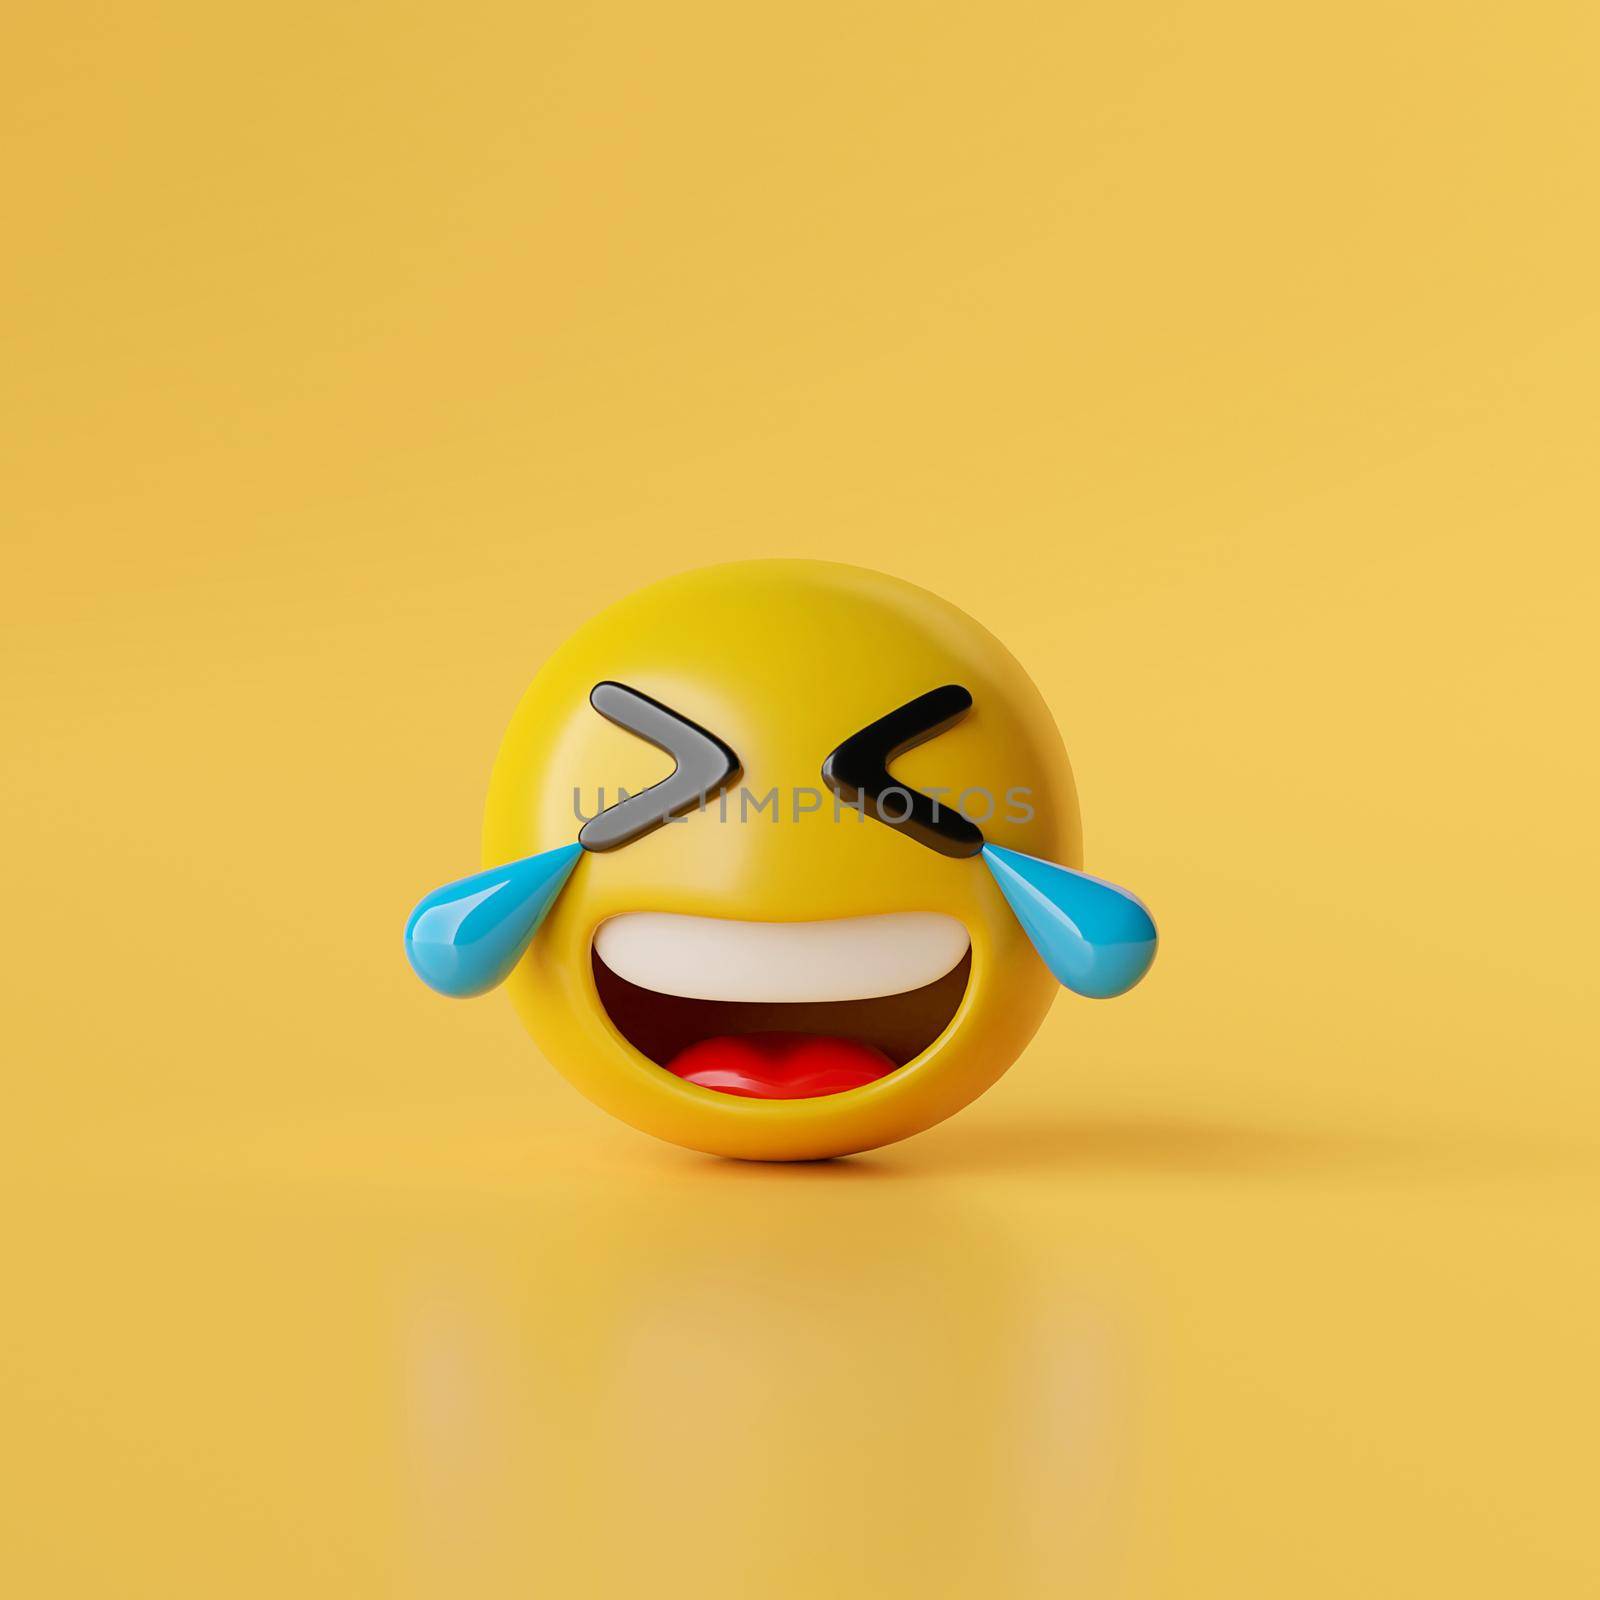 Laughing emoji icons on yellow background, 3d illustration by nutzchotwarut